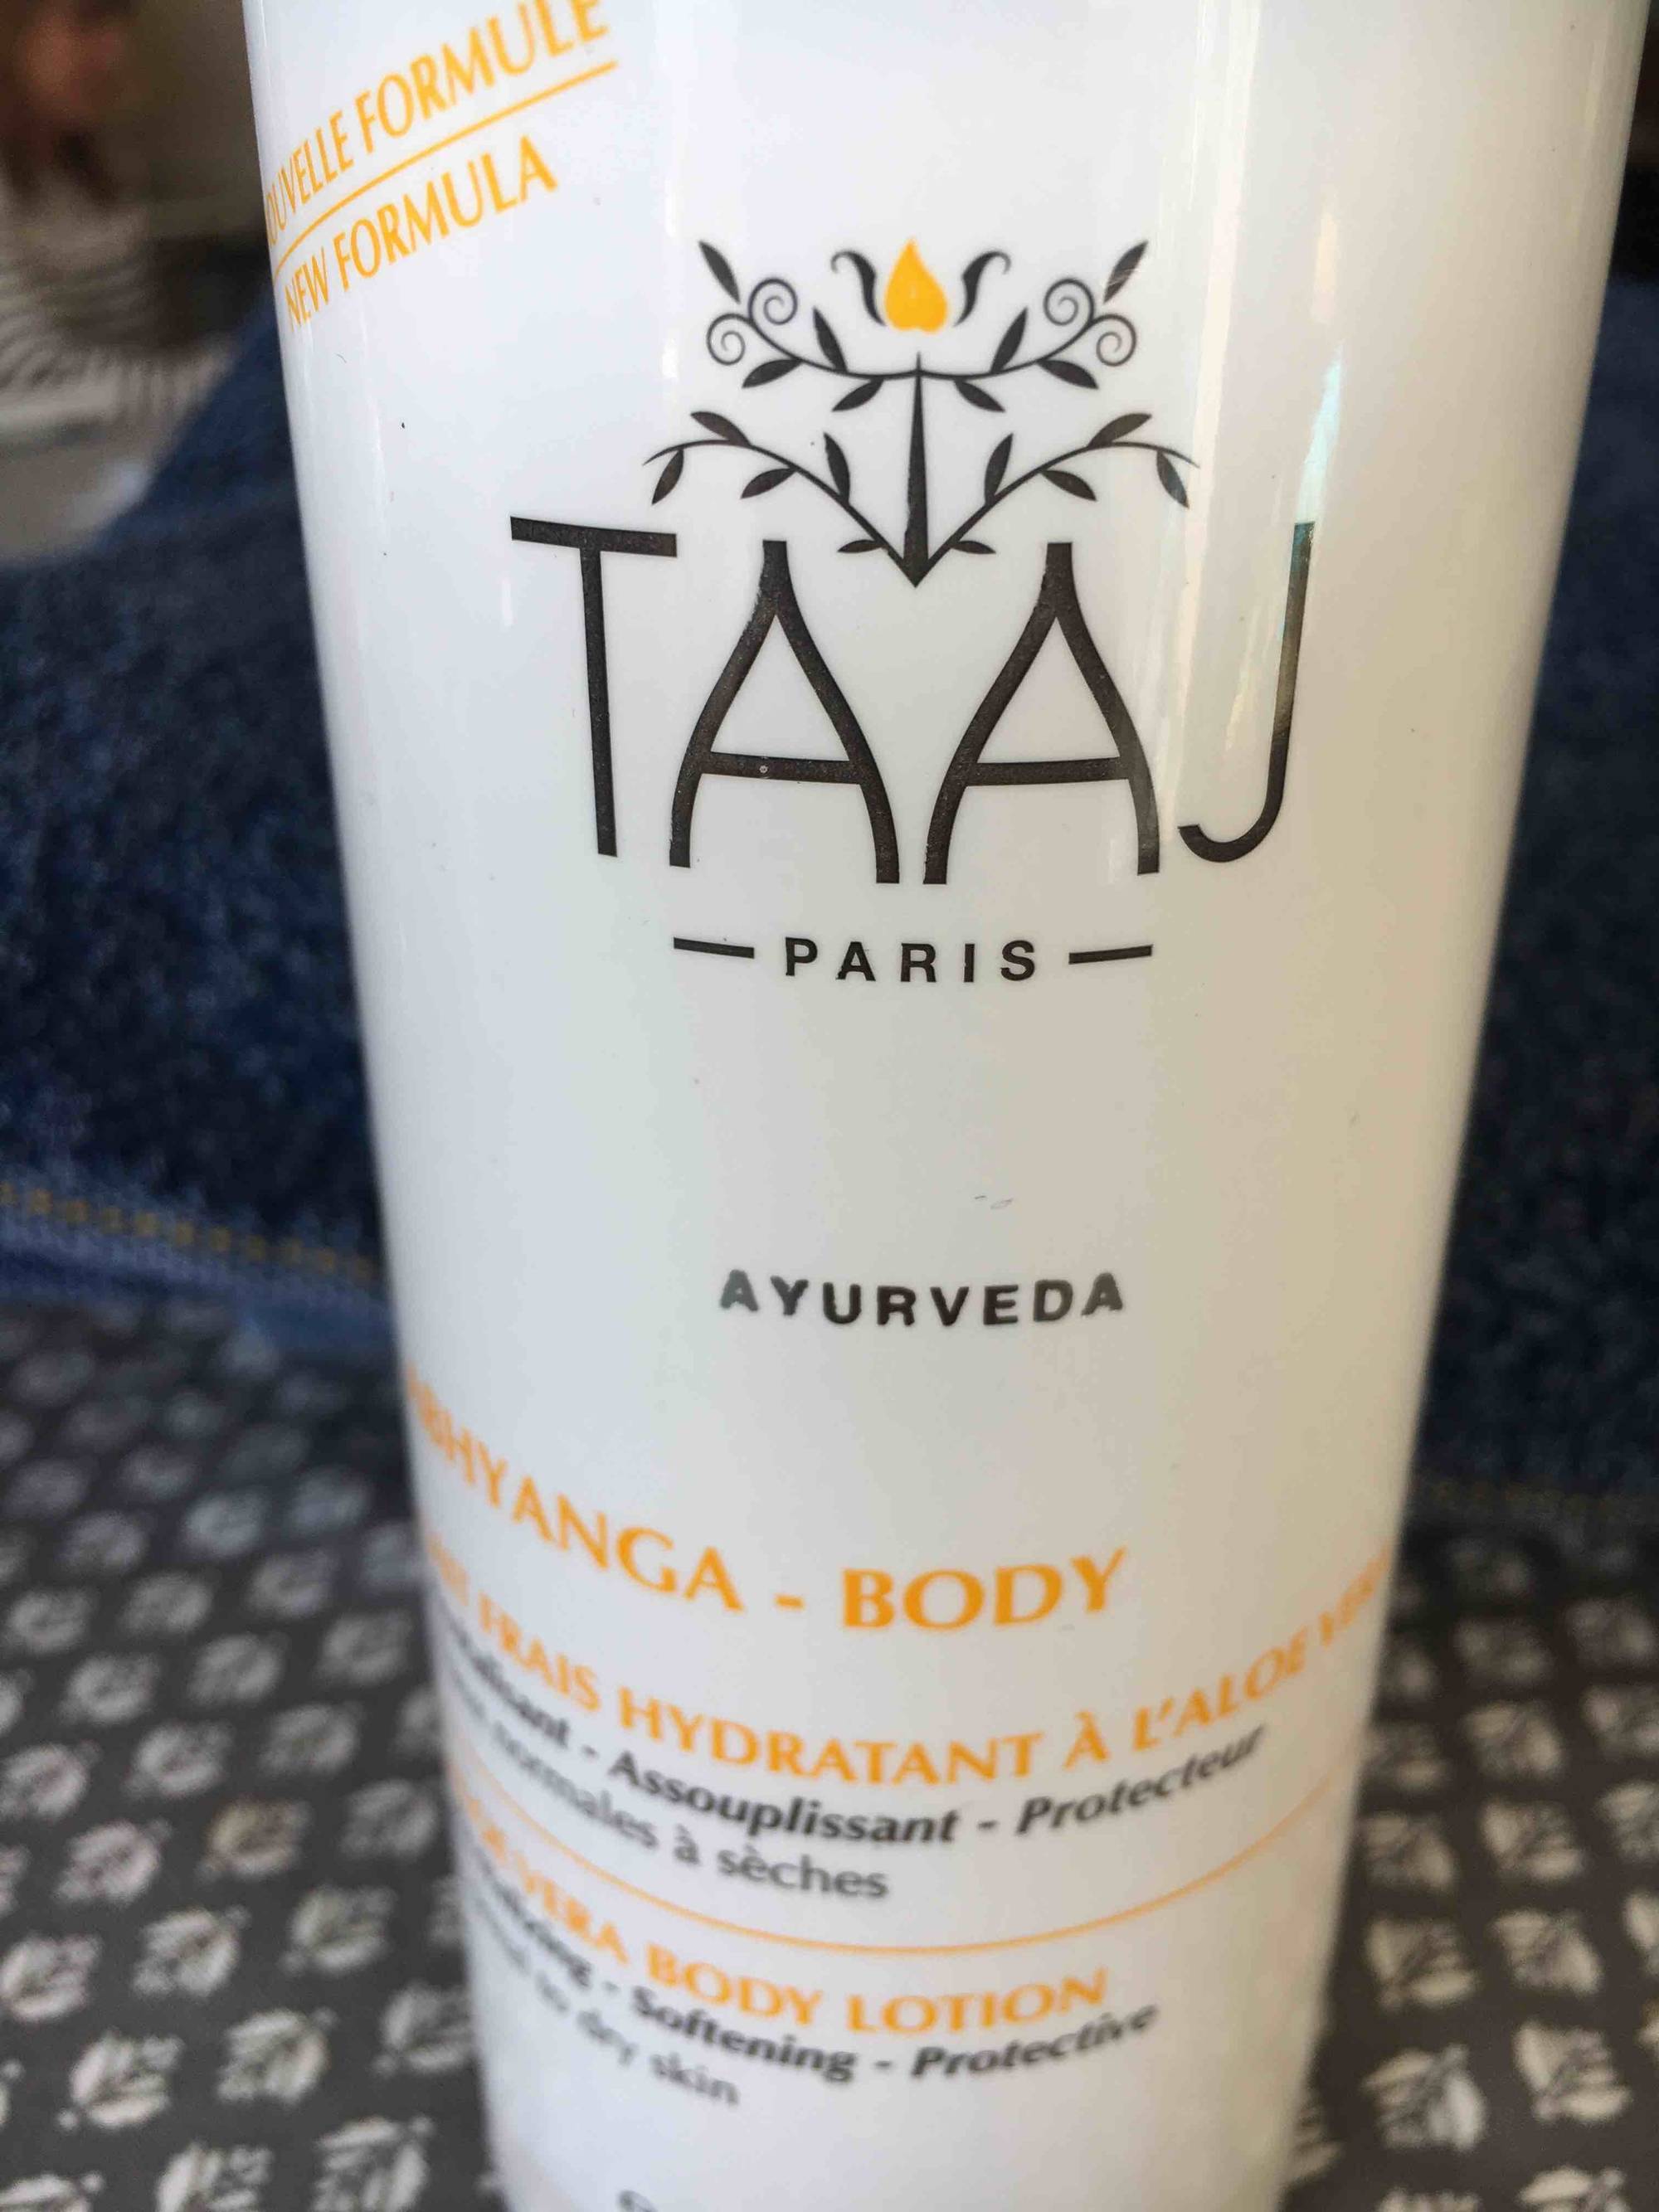 TAAJ - Abhyanga - Lait frais hydratant à l'aloe vera